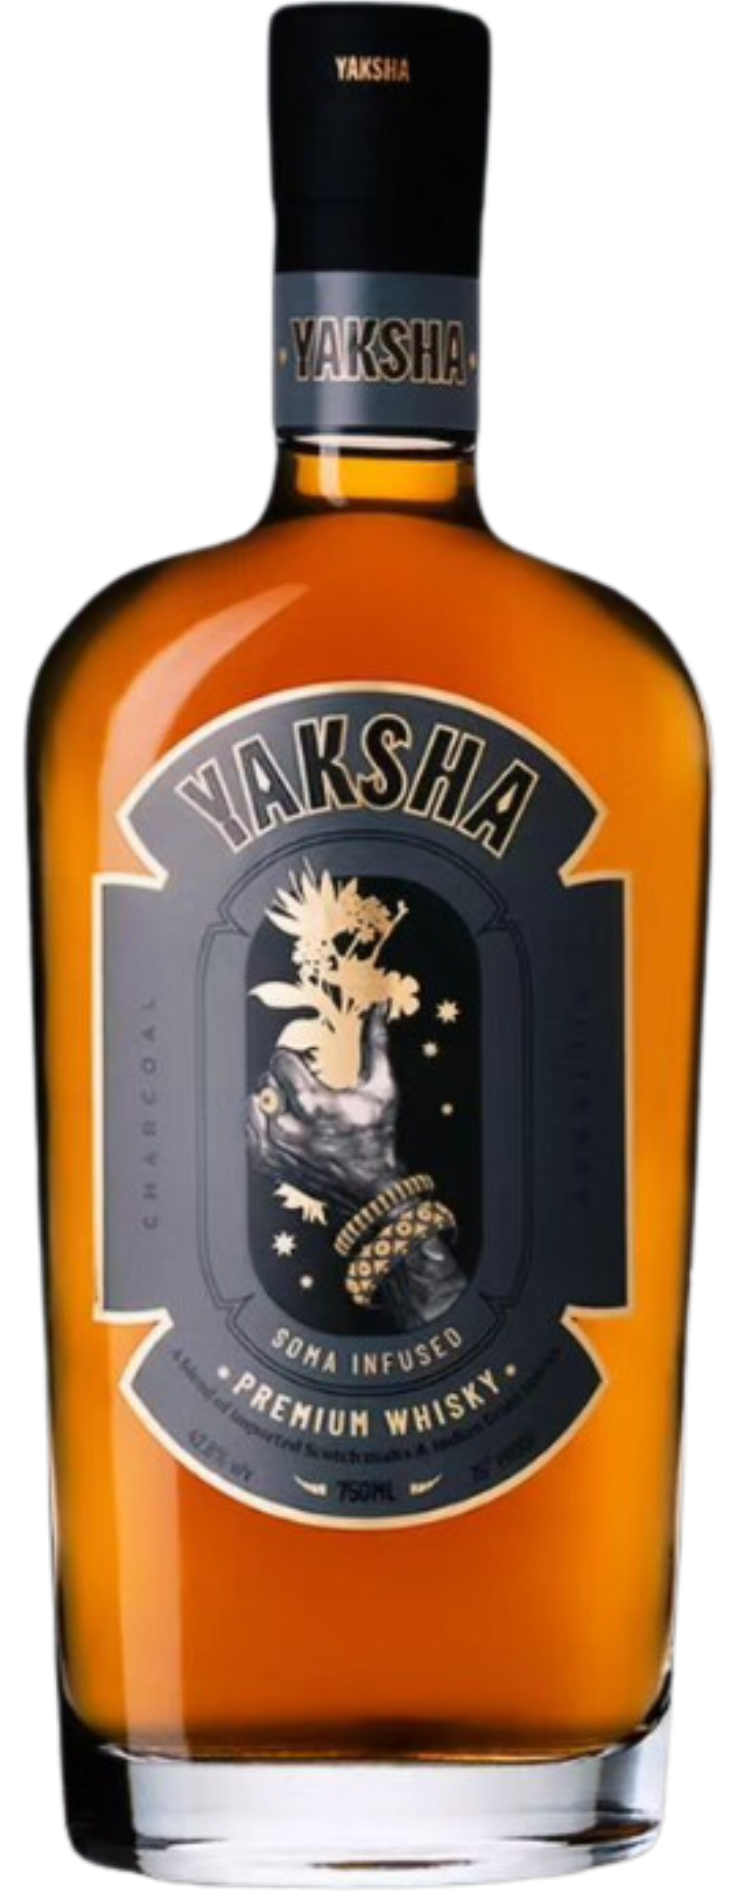 Yaksha Premium Whiskey